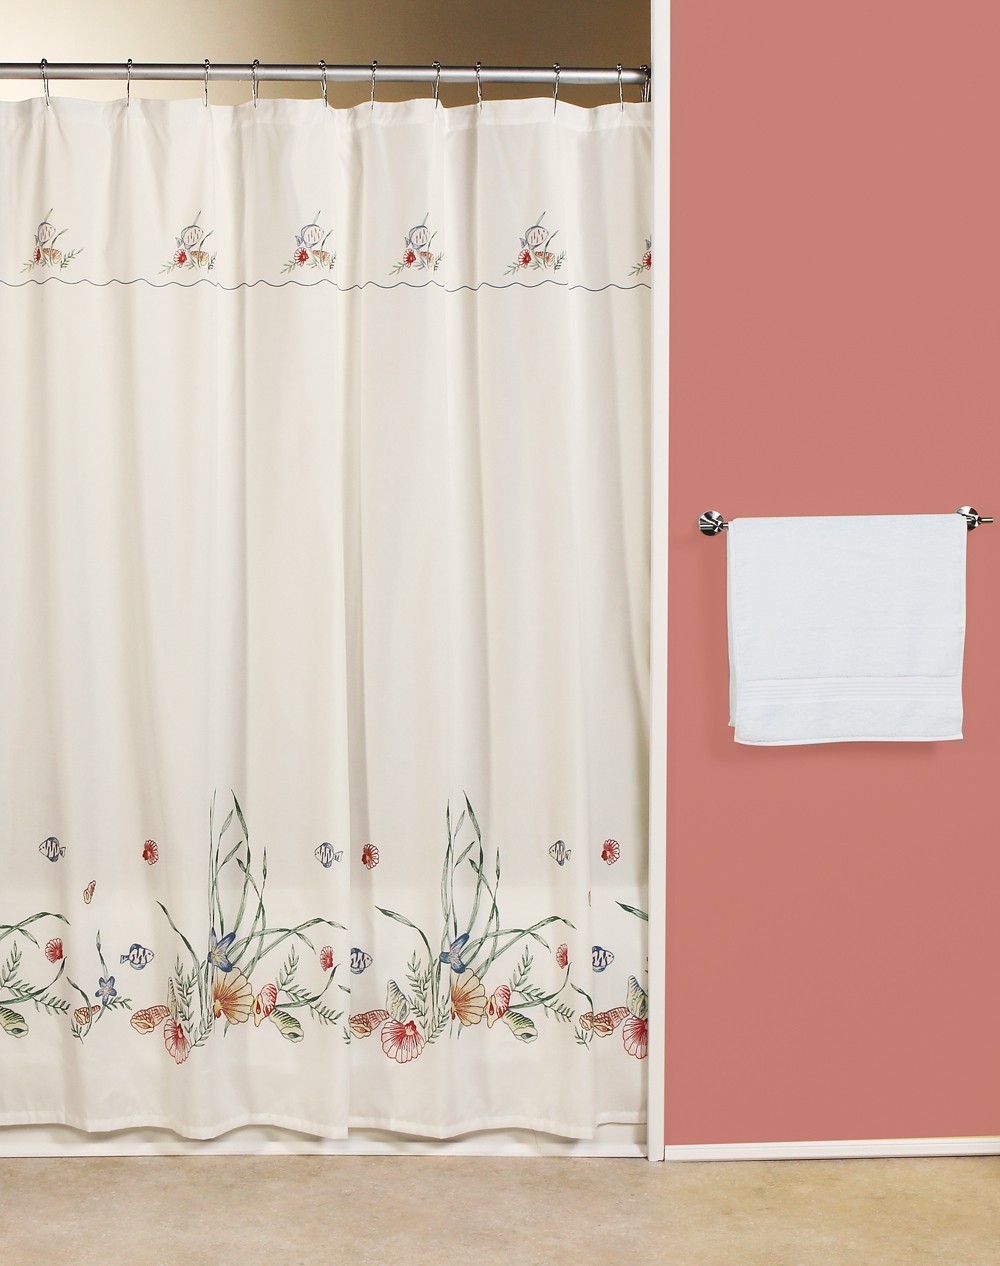 Shower Curtain Fabric in Curtain